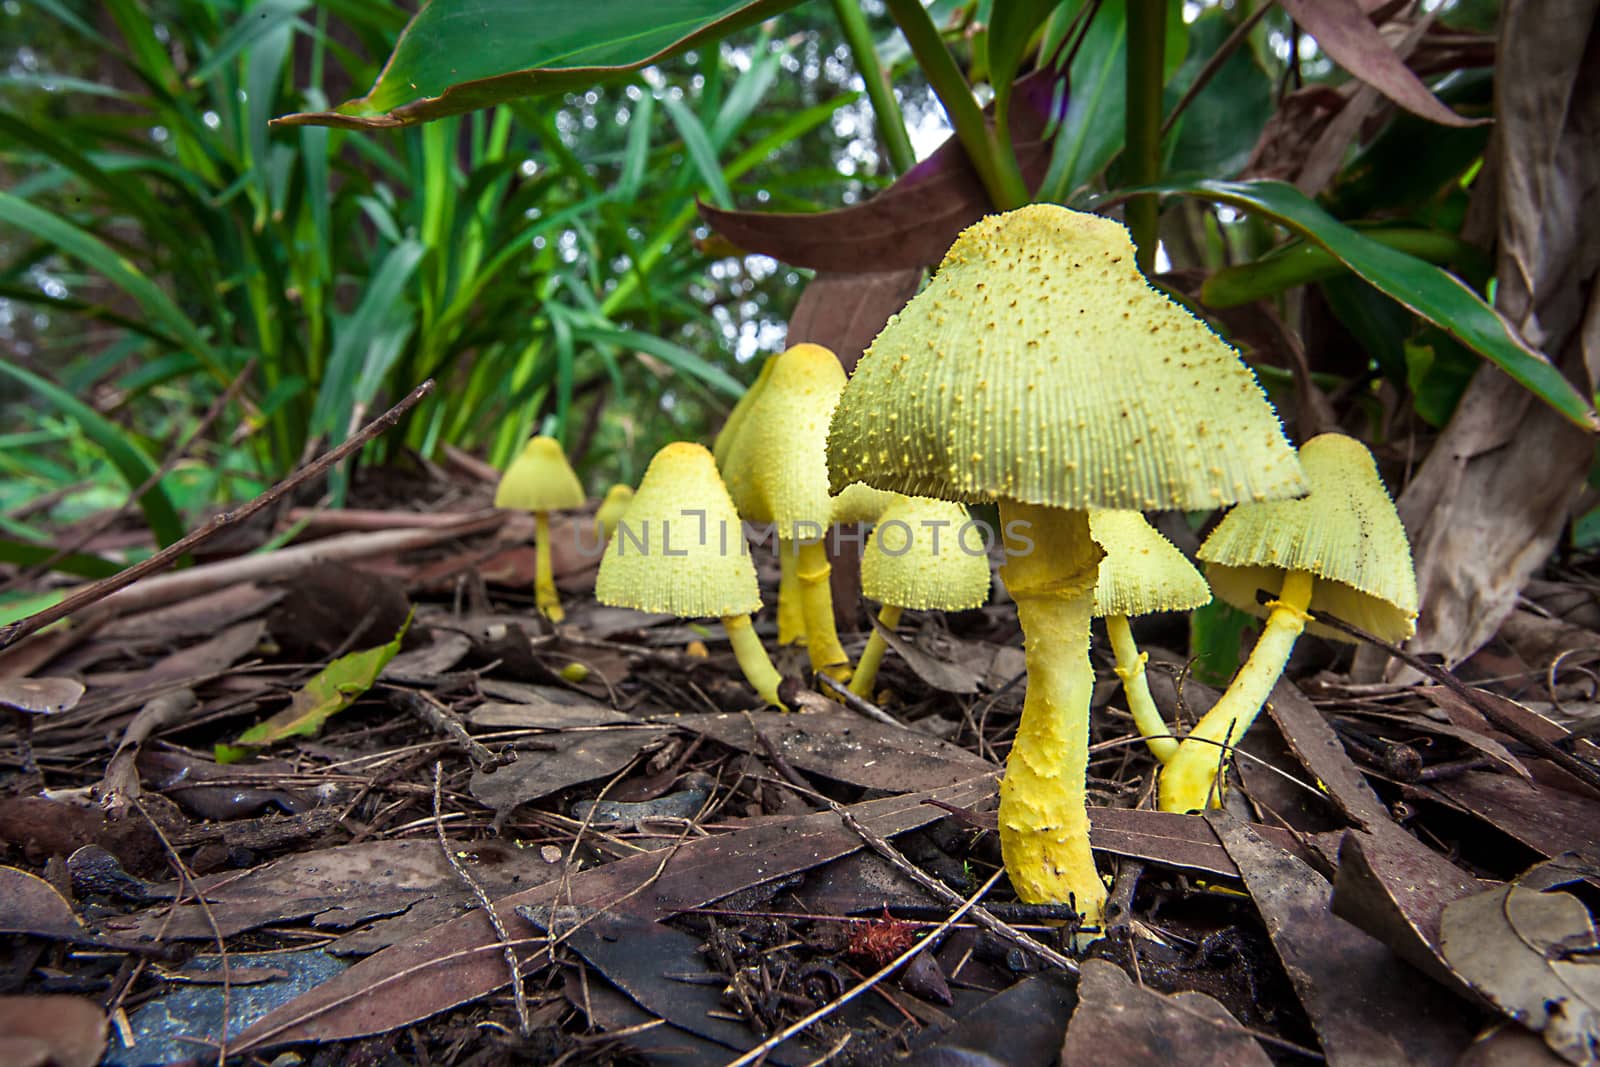 Mushrooms in New South Wales Australia Yellow fold umbrella Leucoprinus birnbaumii